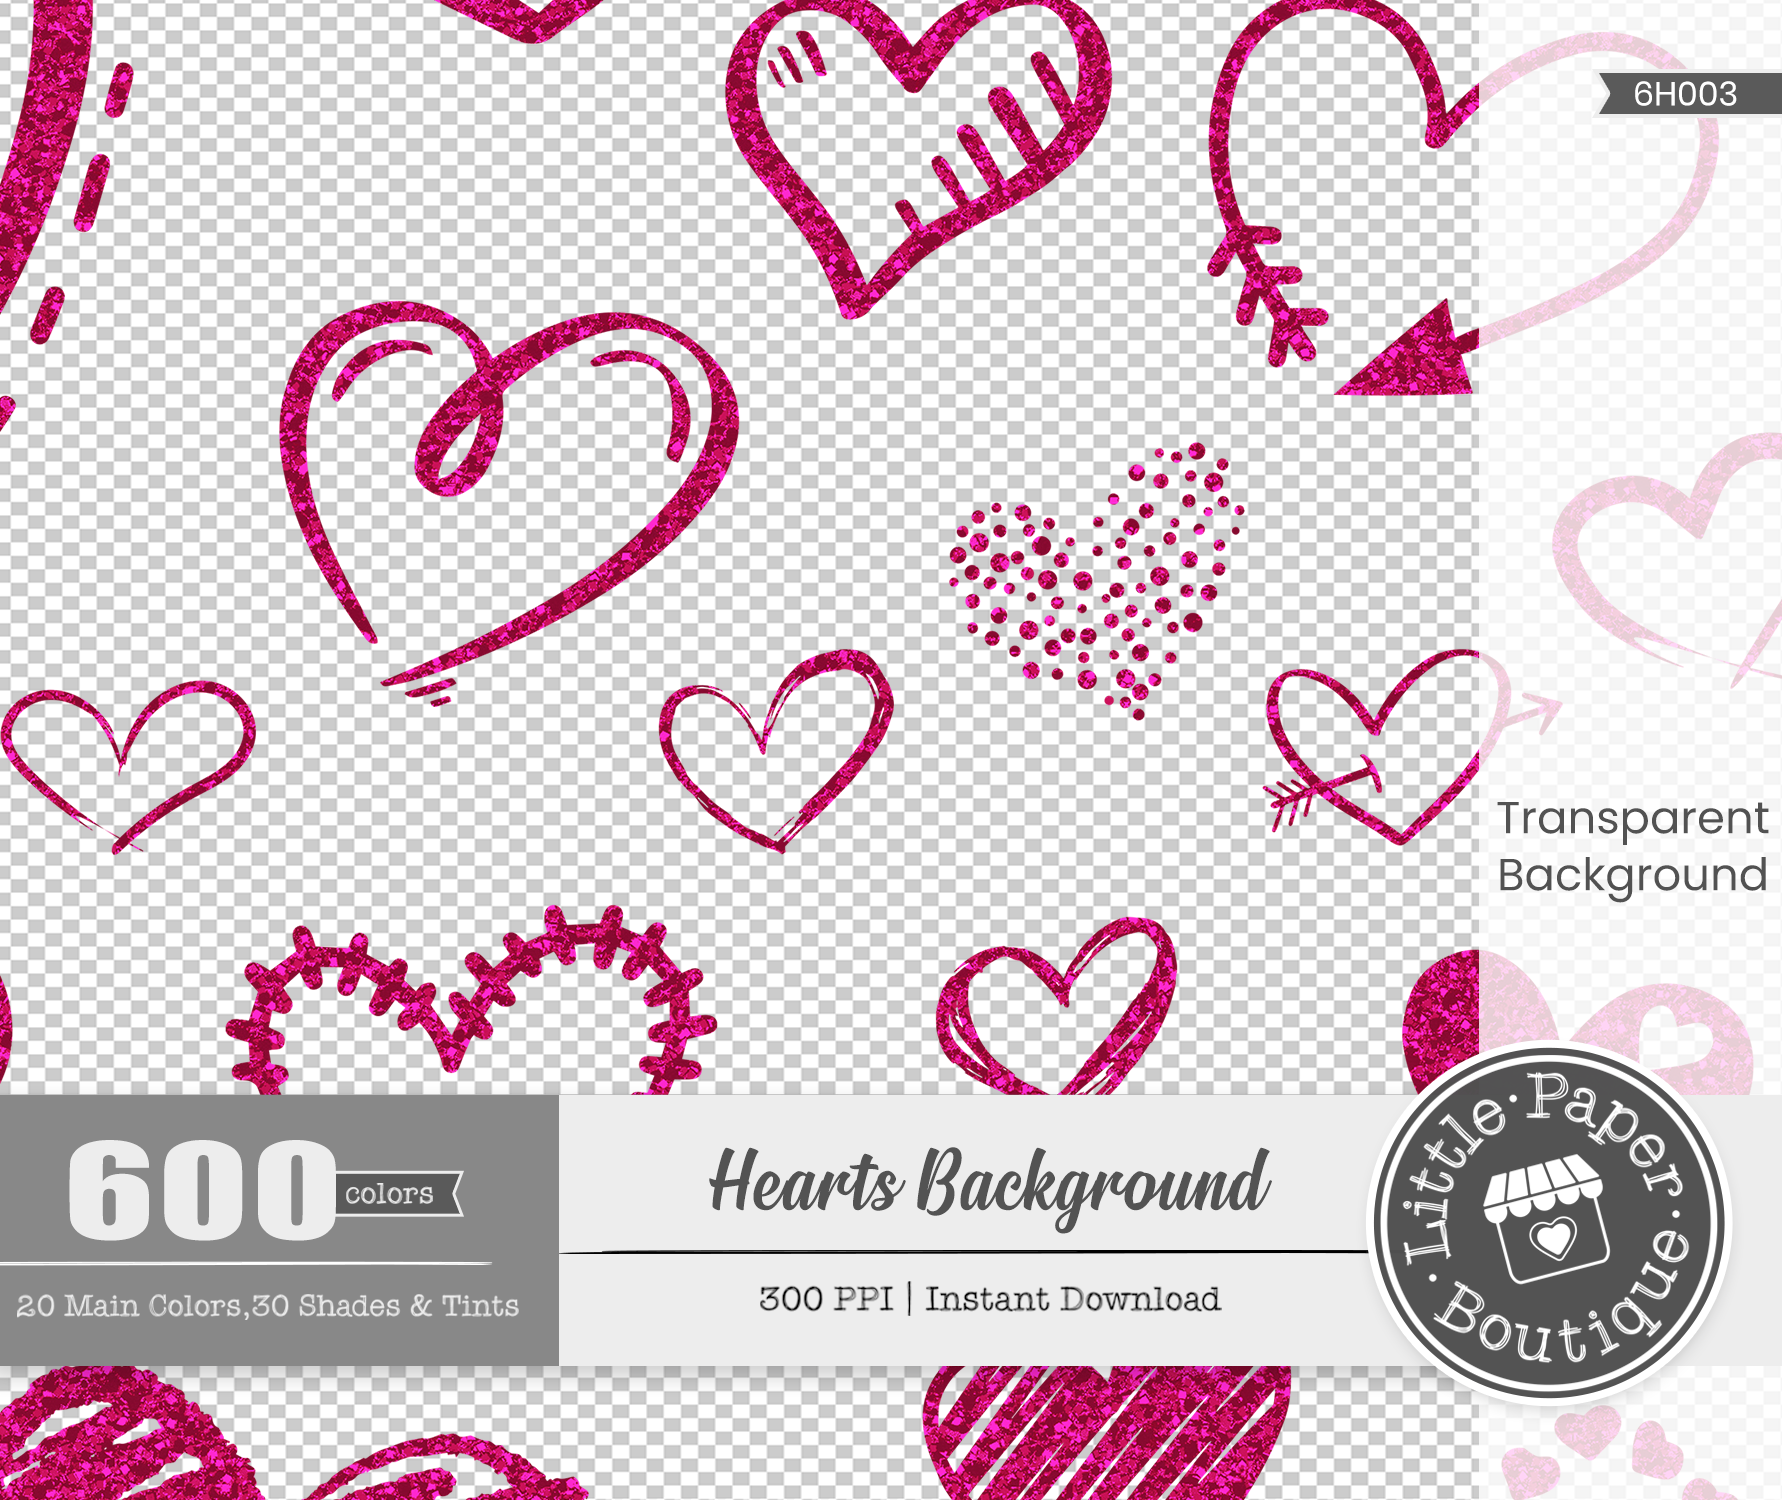 Pink Hearts - Digital Scrapbook Pages - INSTANT DOWNLOAD